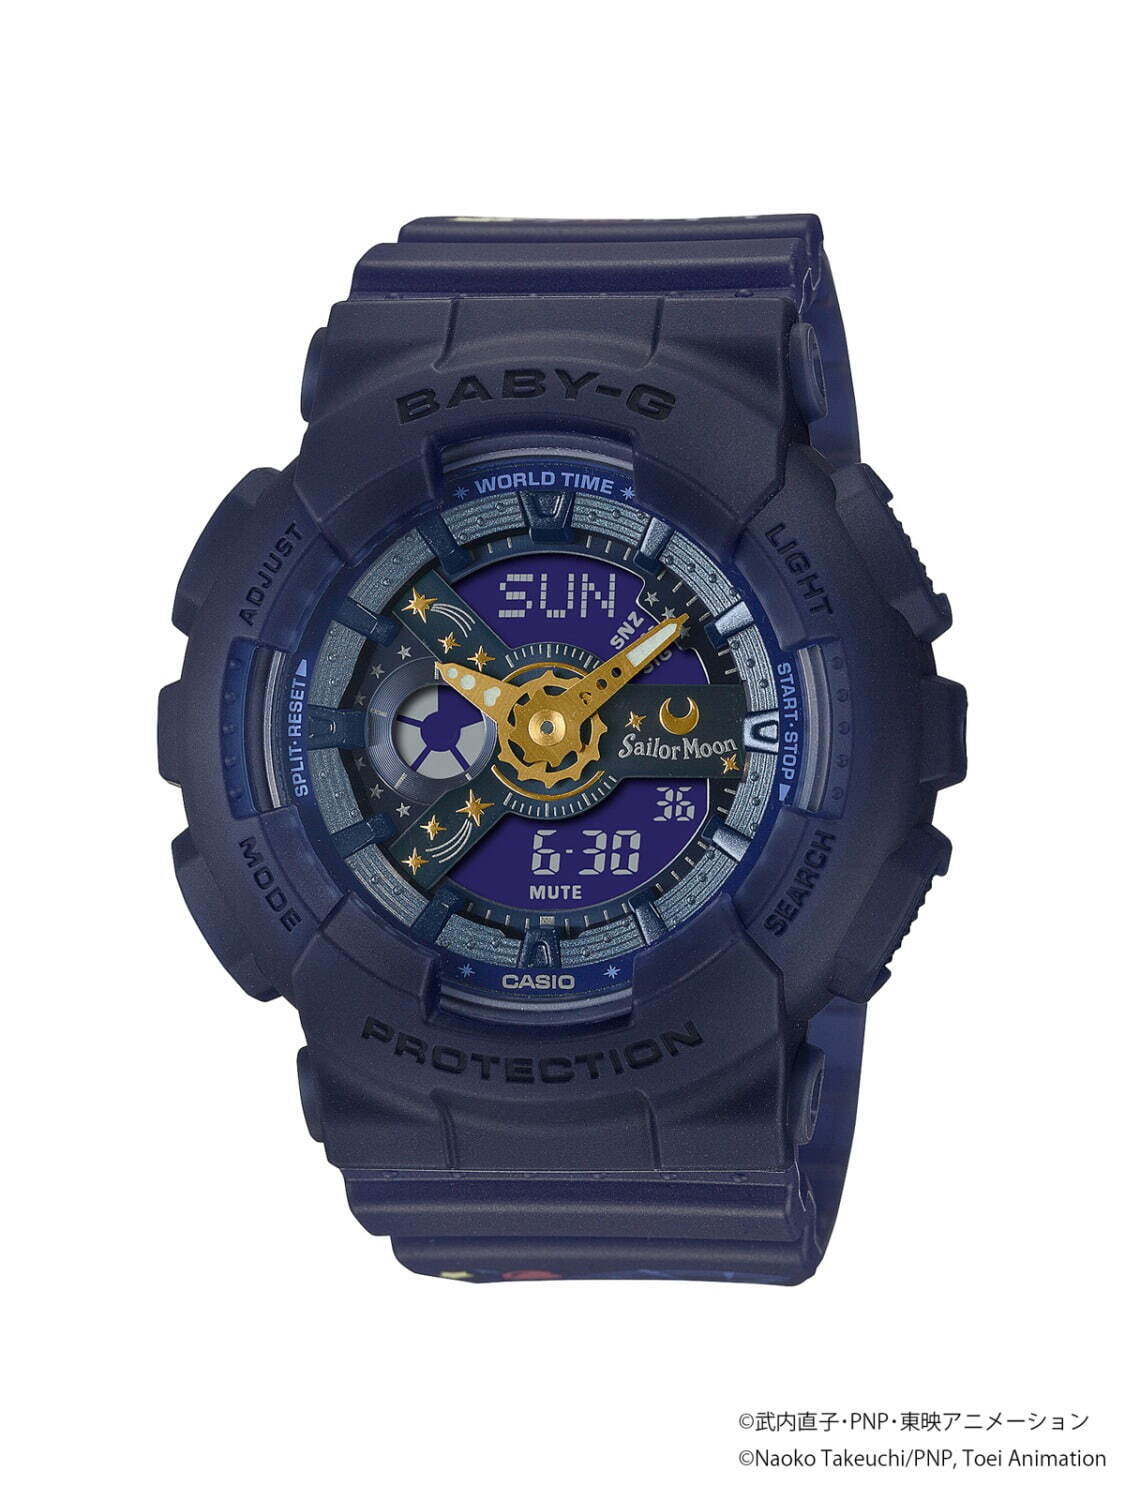 BABY-G「セーラームーン」変身シーン着想の腕時計、煌めく月 